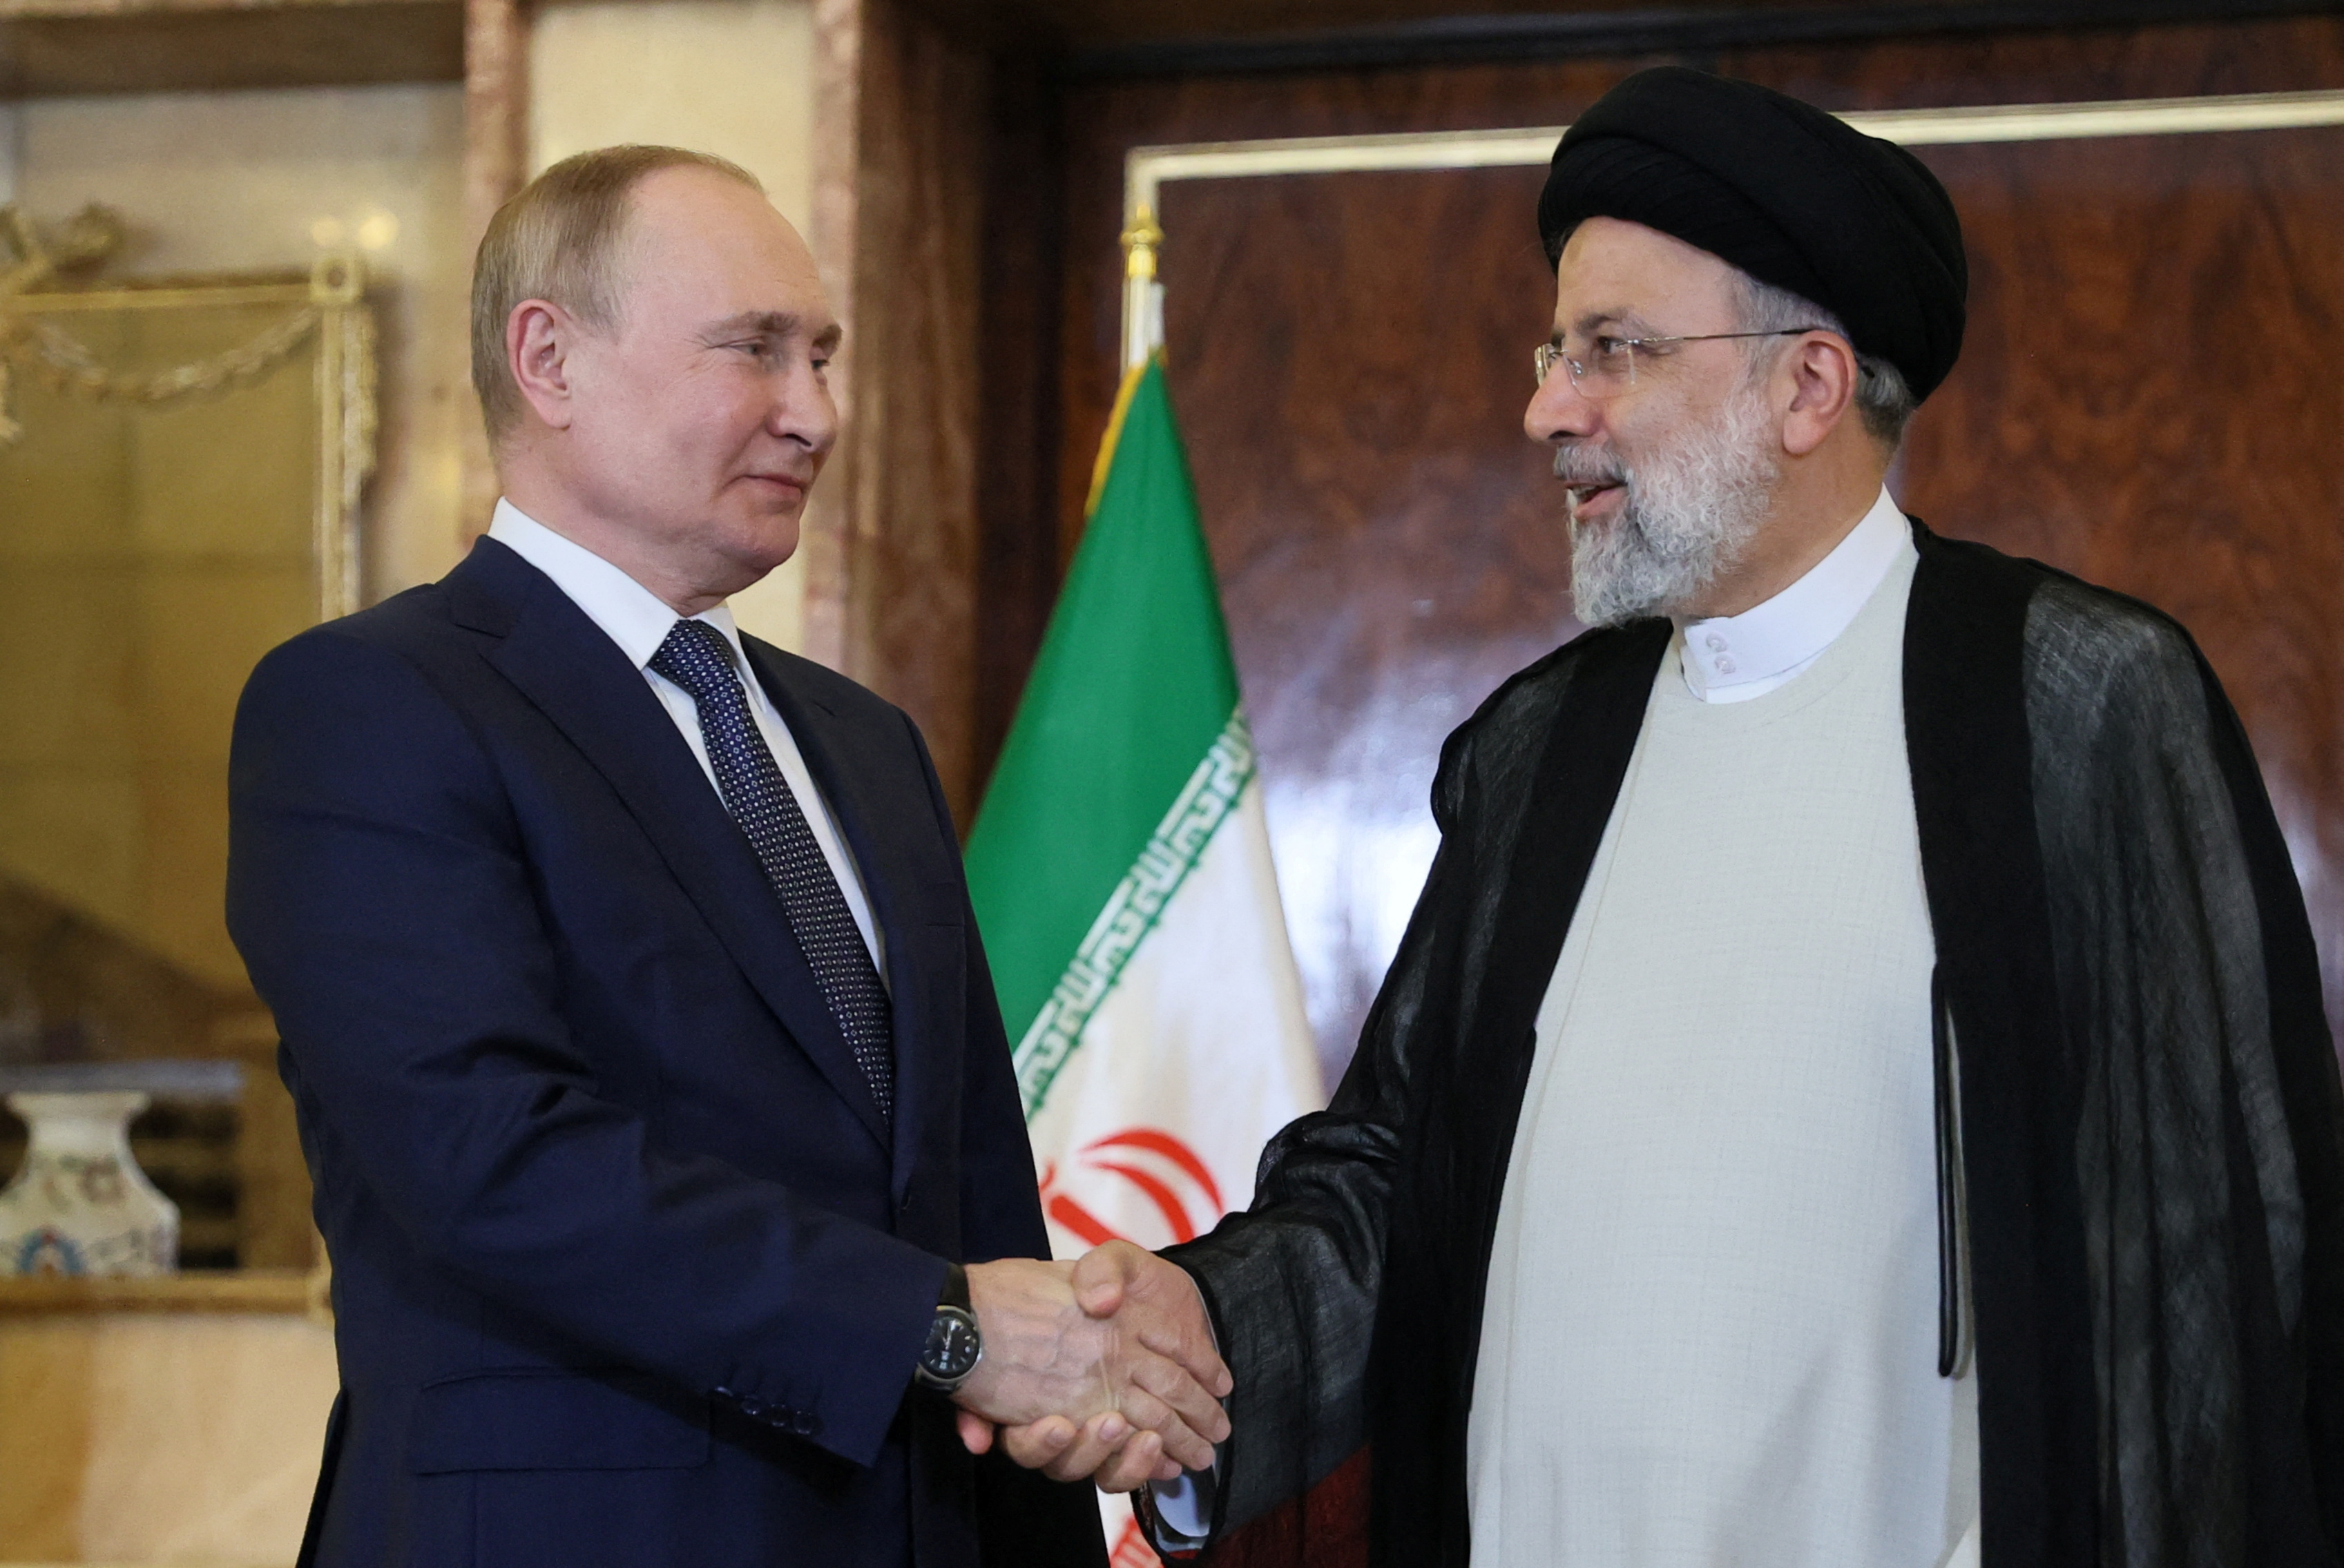 Delegation of 80 large Russian companies to visit Iran, says Putin